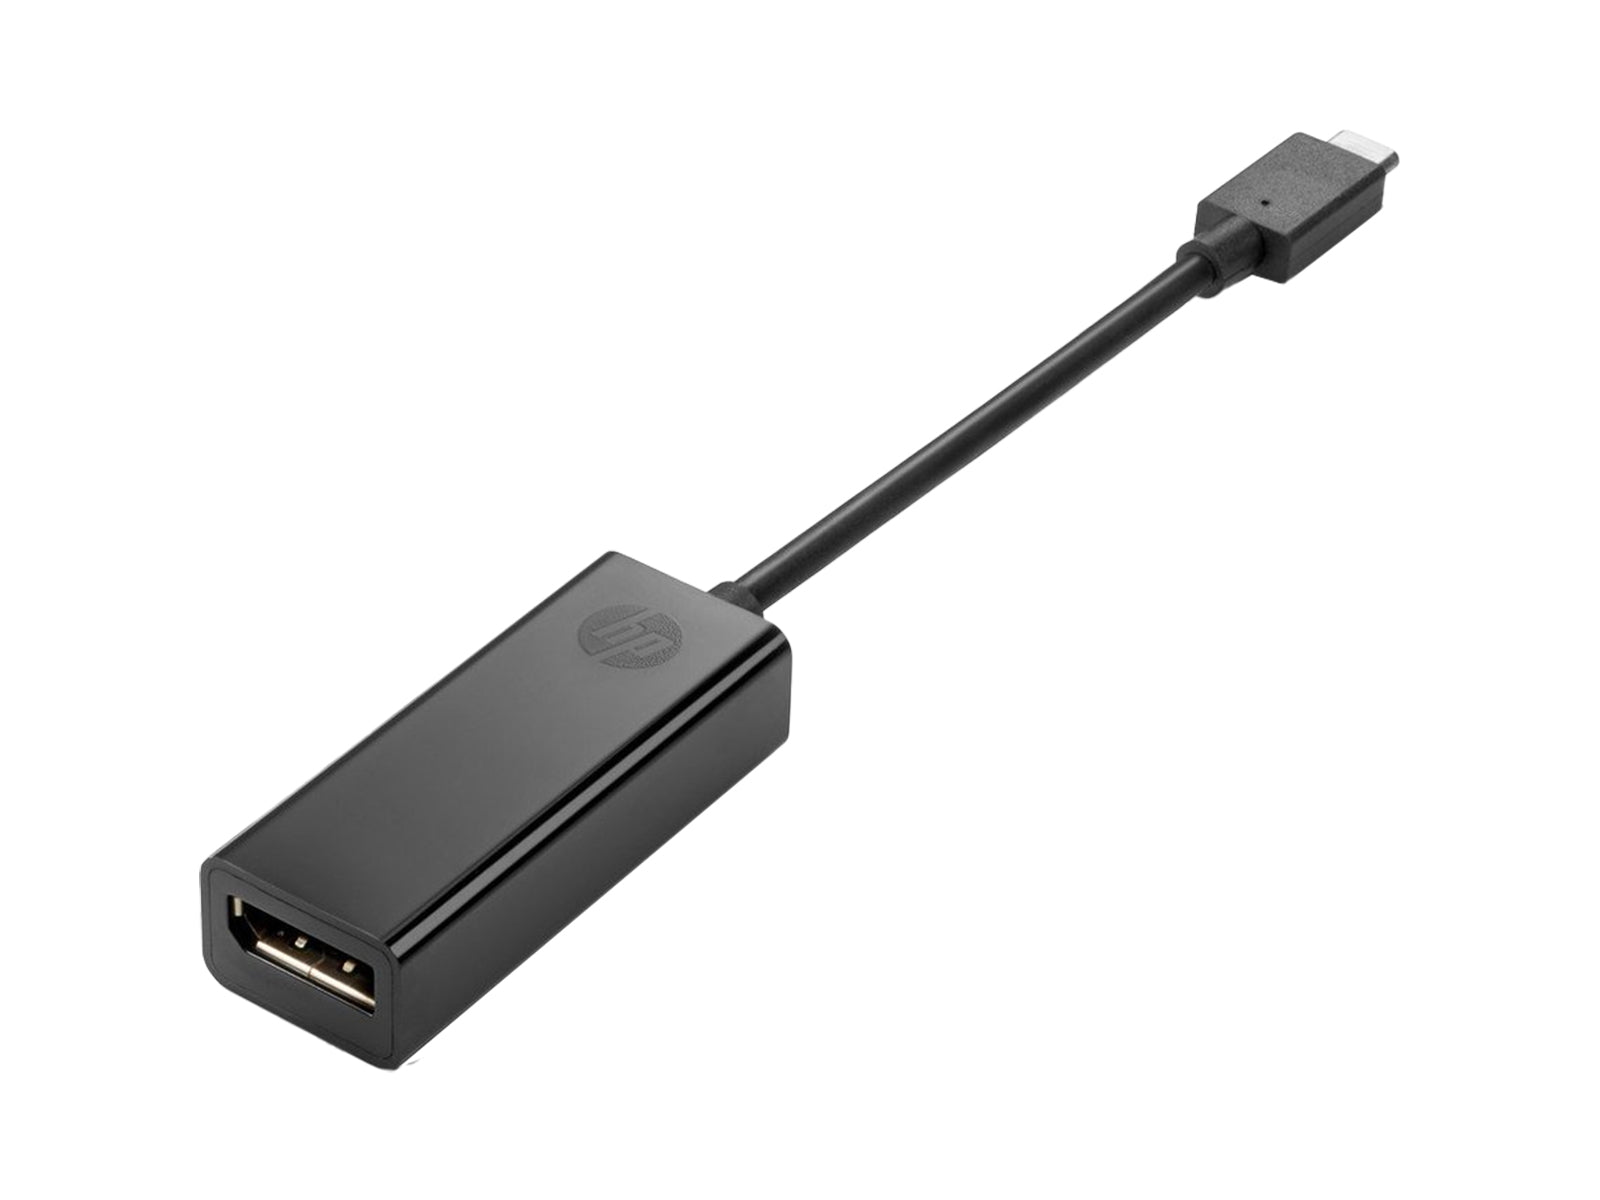 HP USB Type-C to DisplayPort Video Signal Adapter Converter (831119-001) Monitors.com 